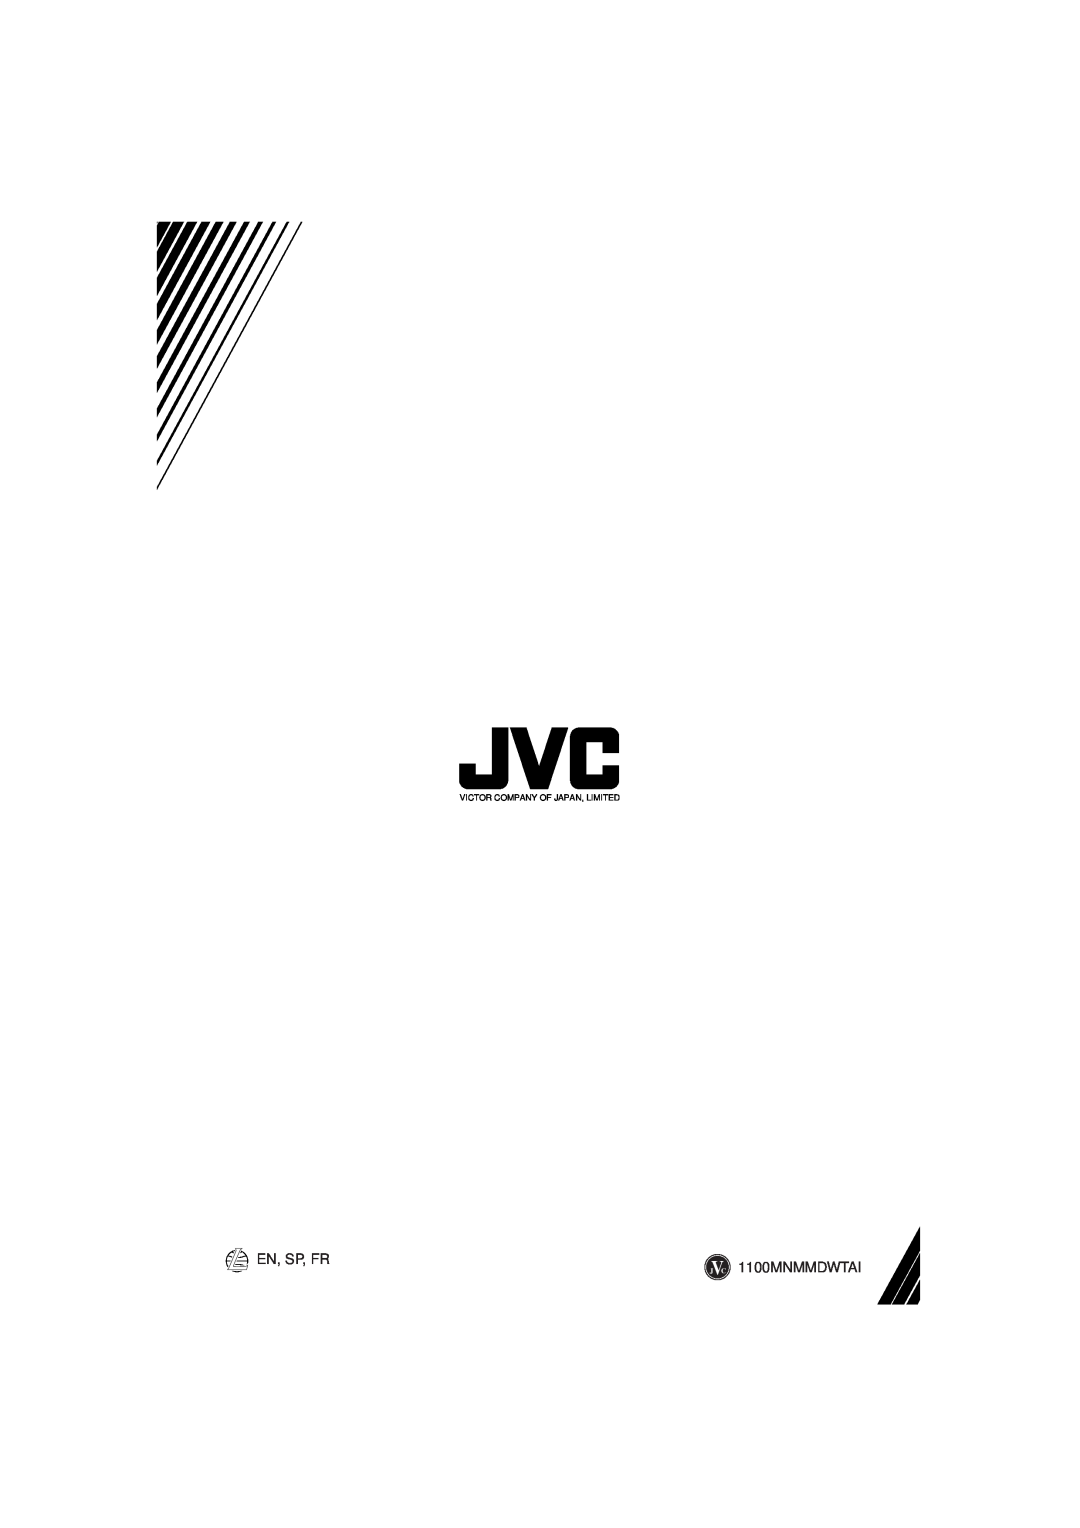 JVC KV-C10 manual EN, SP, FR JVC 1100MNMMDWTAI, Victor Company Of Japan, Limited 